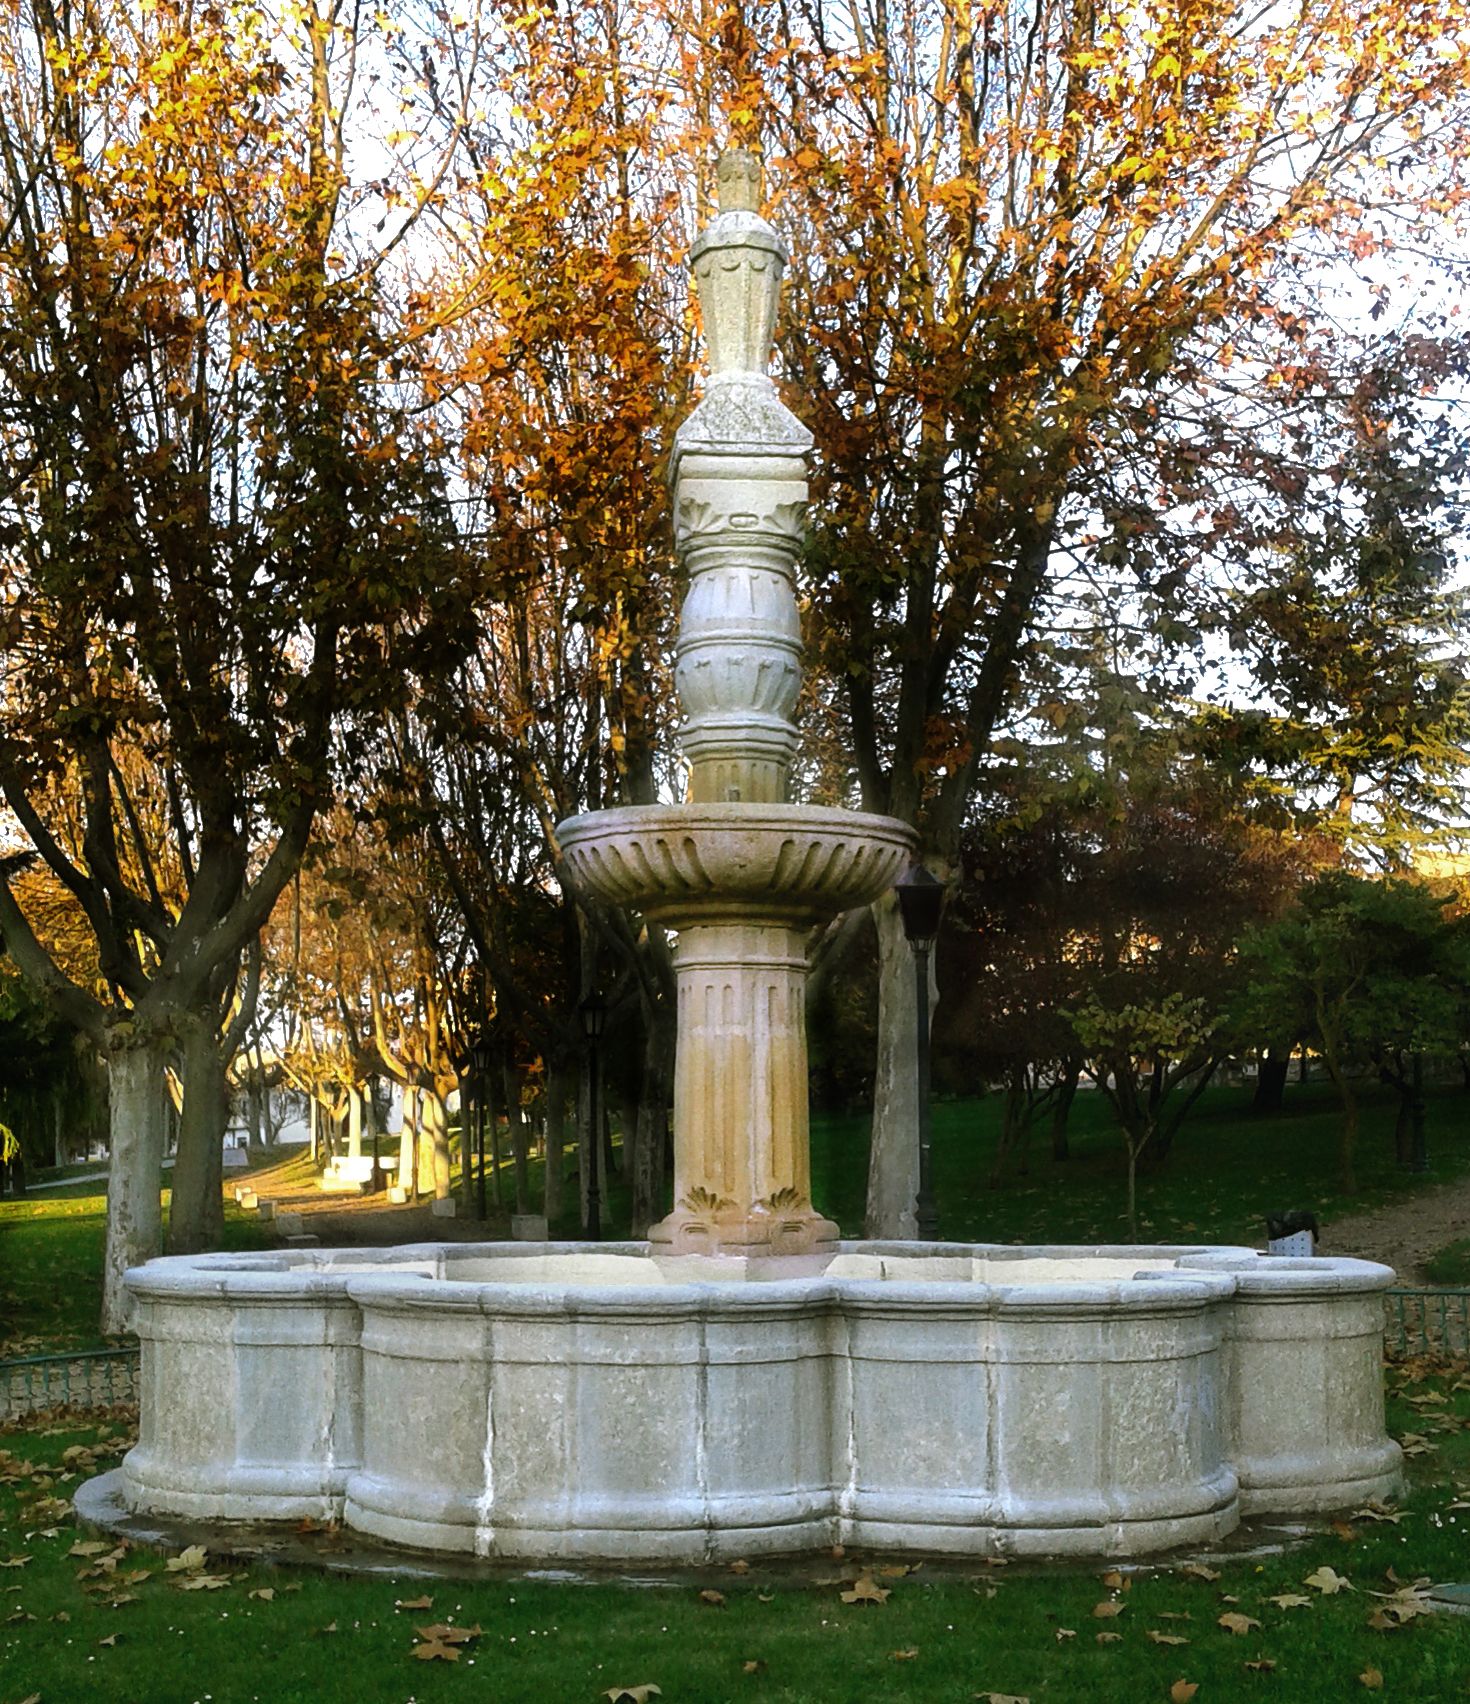 Reubicaci�n del monumento del siglo XVIII en San Mart�n.jpg